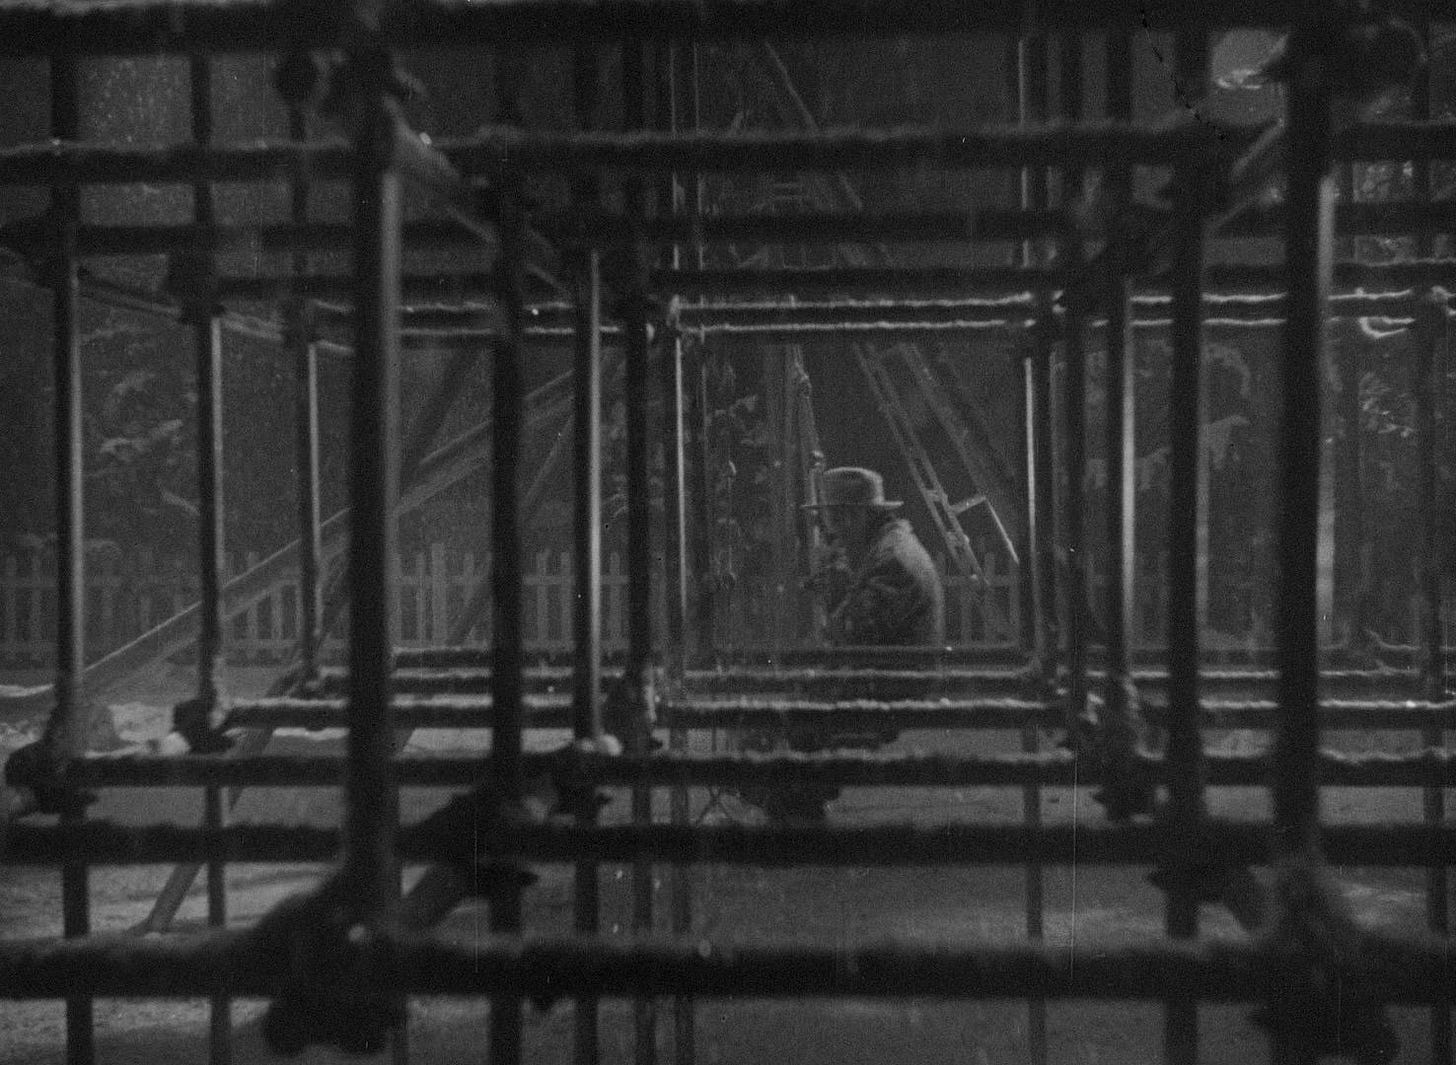 Ikiru (1952) (Top 100 Films) - David Calhoun's blog